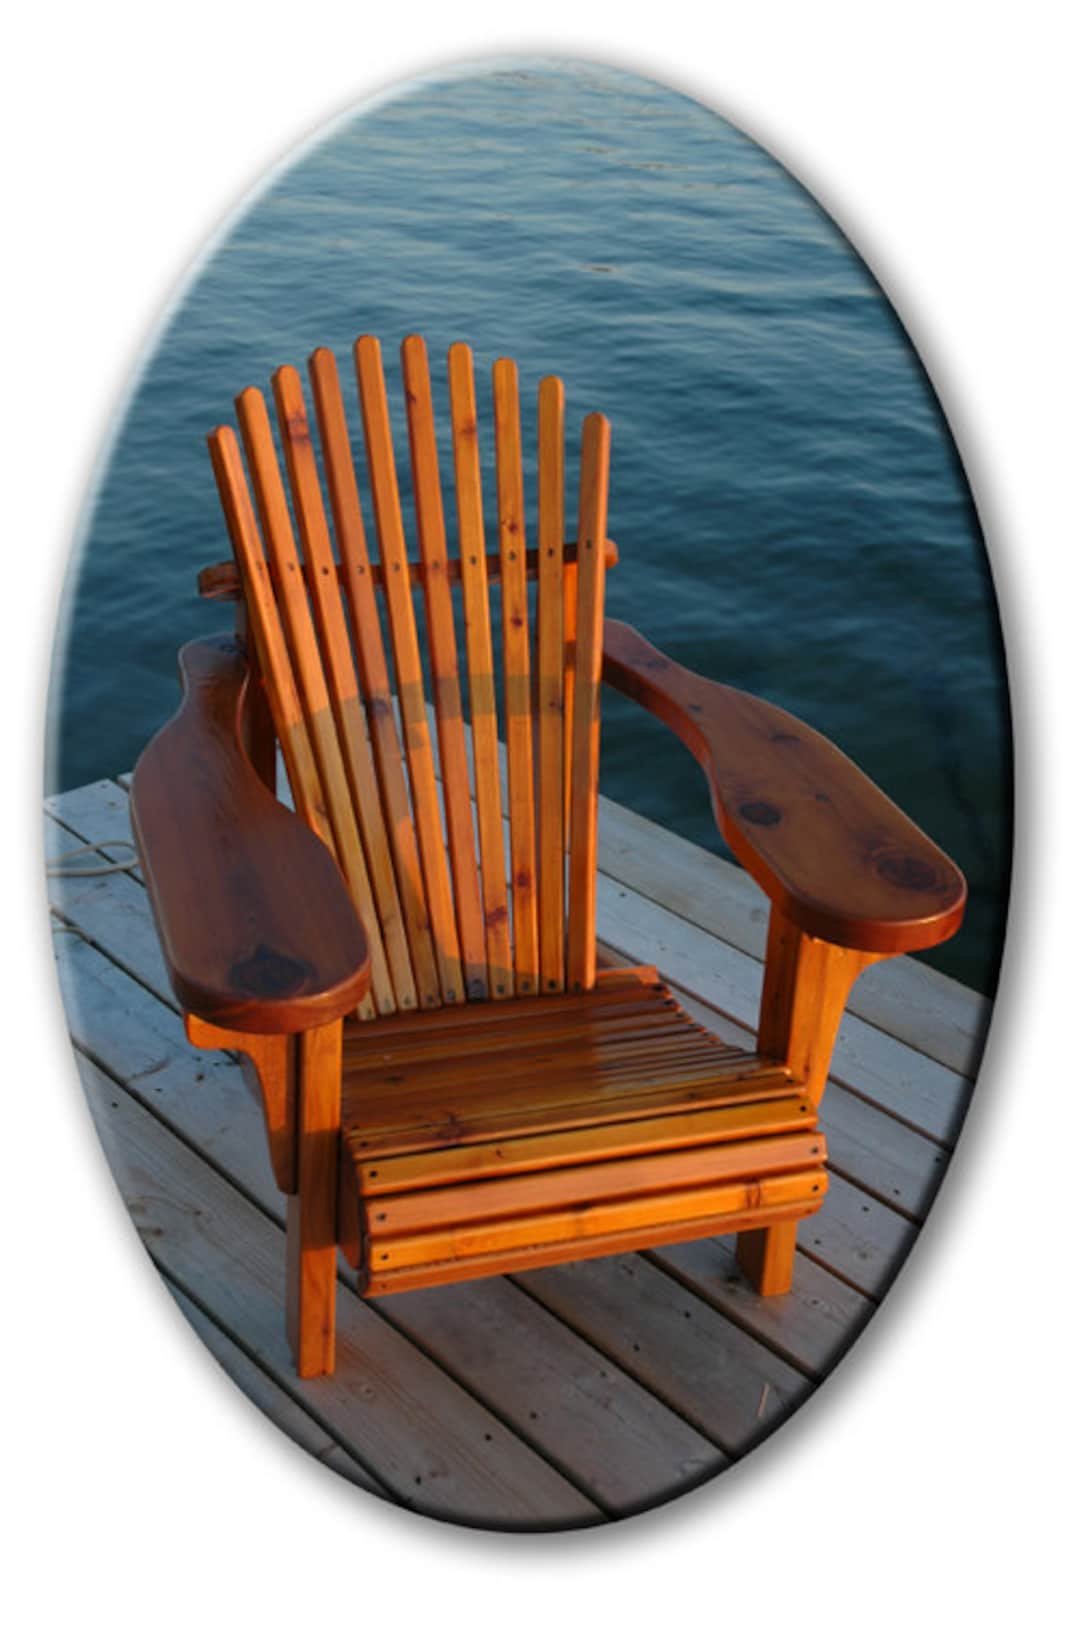 MC2 Muskoka Chair Adirondack Chair Plans and Full Size - Etsy